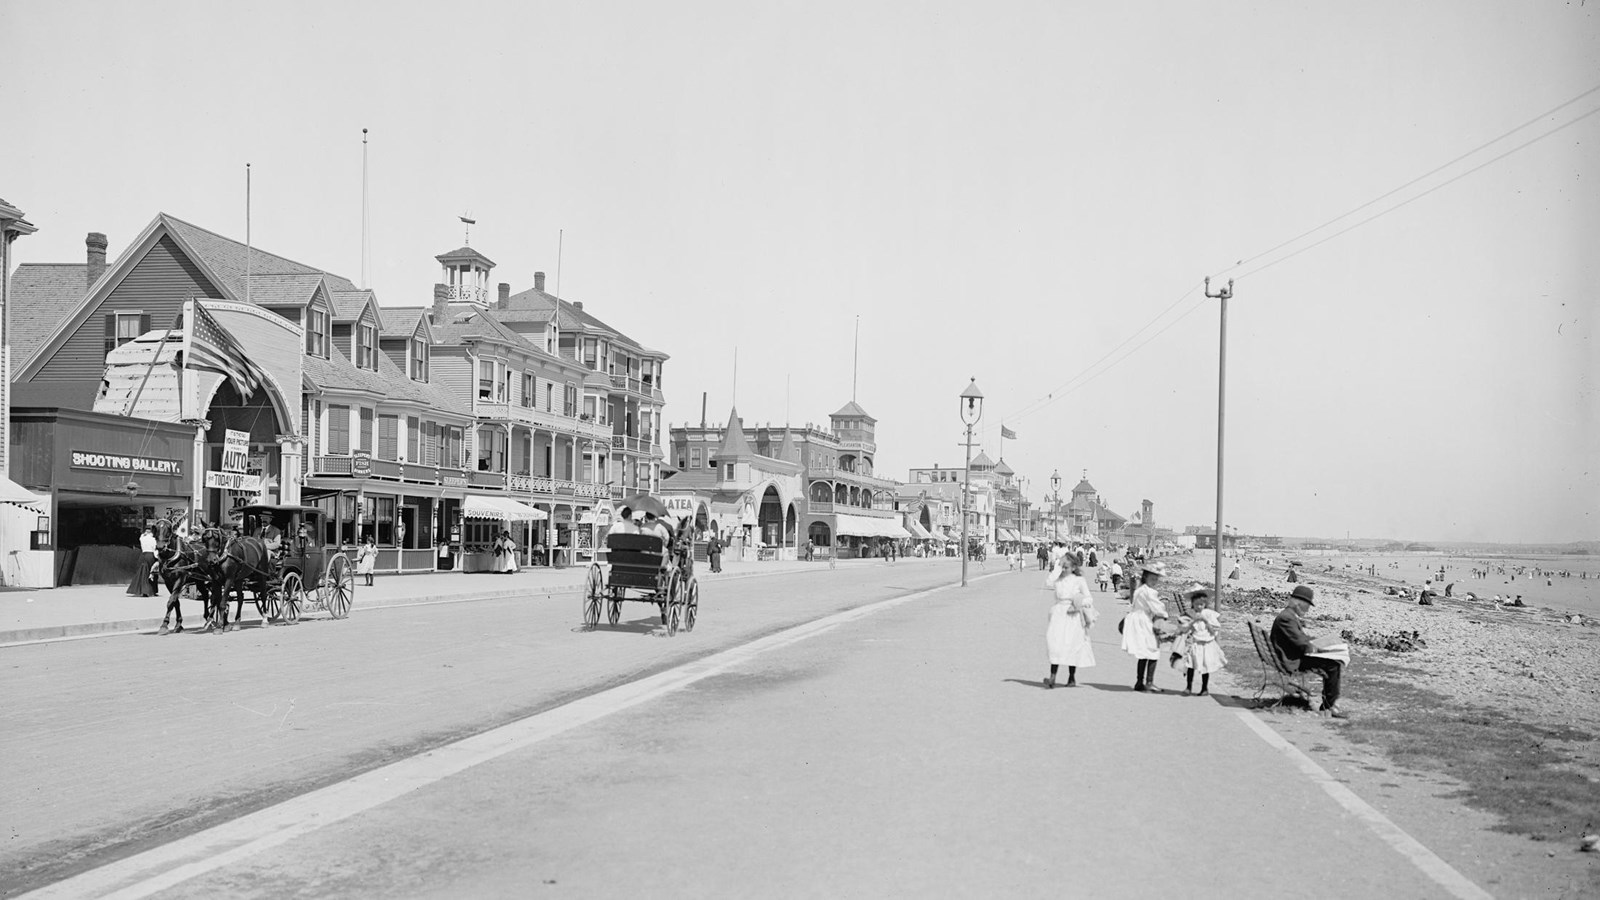 Revere Beach Boulevard